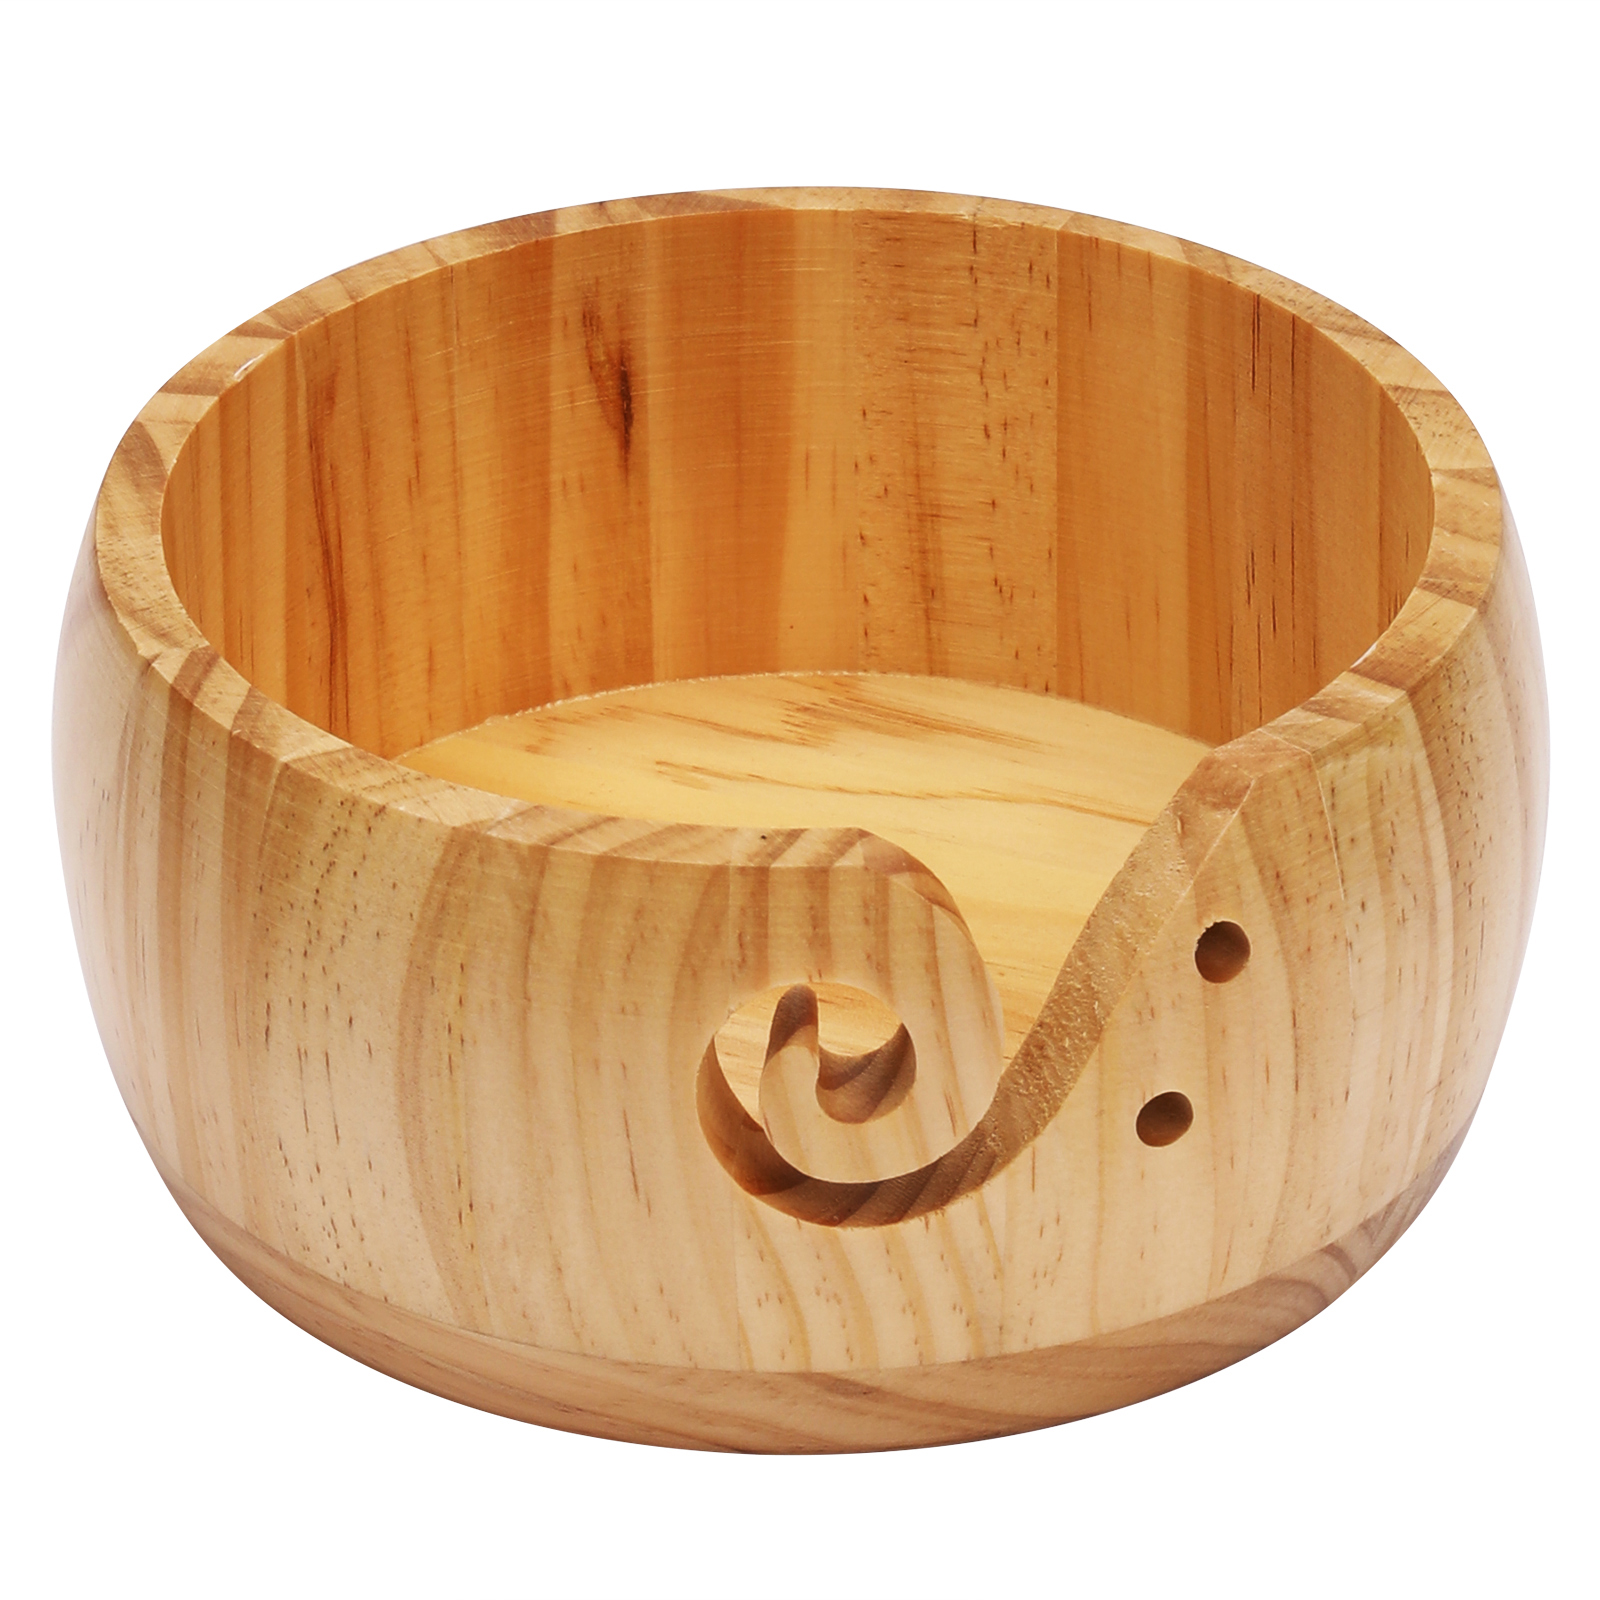 Large Capacity Yarn Bowl Solid Wood Handmade Wooden Bowl